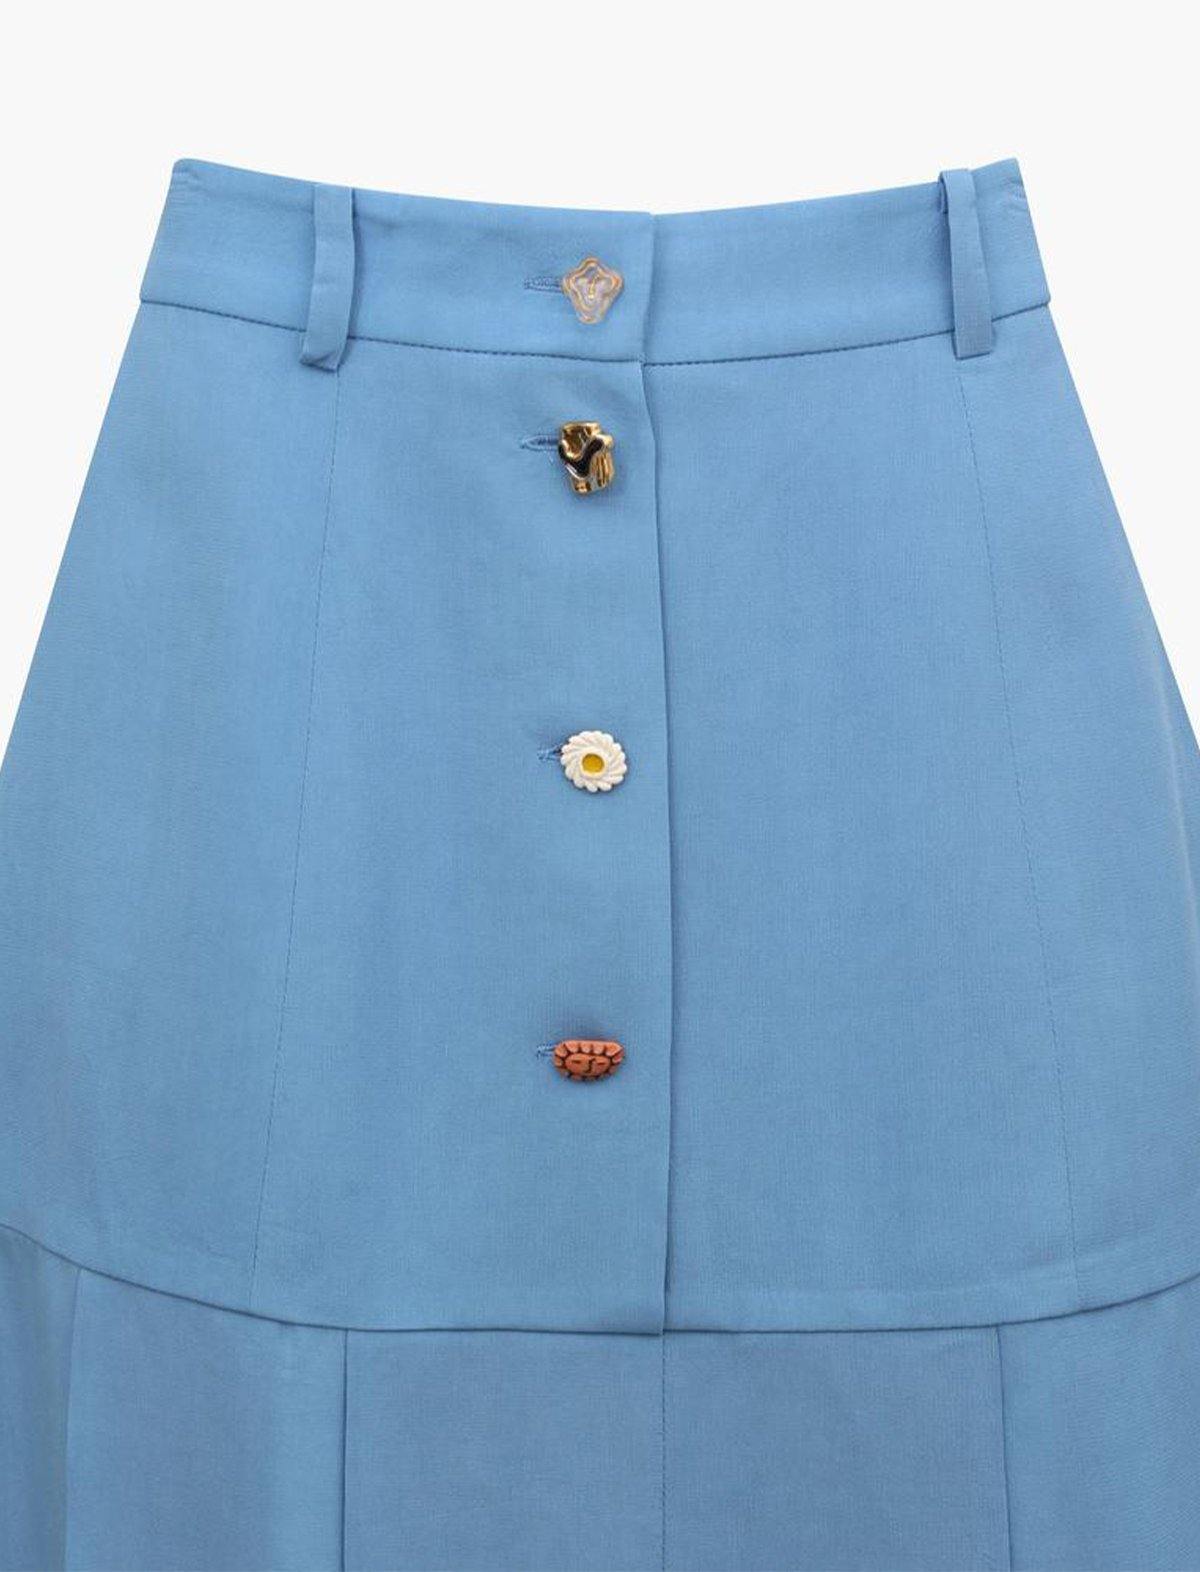 REJINA PYO Miller Viscose Skirt In Blue | CLOSET Singapore